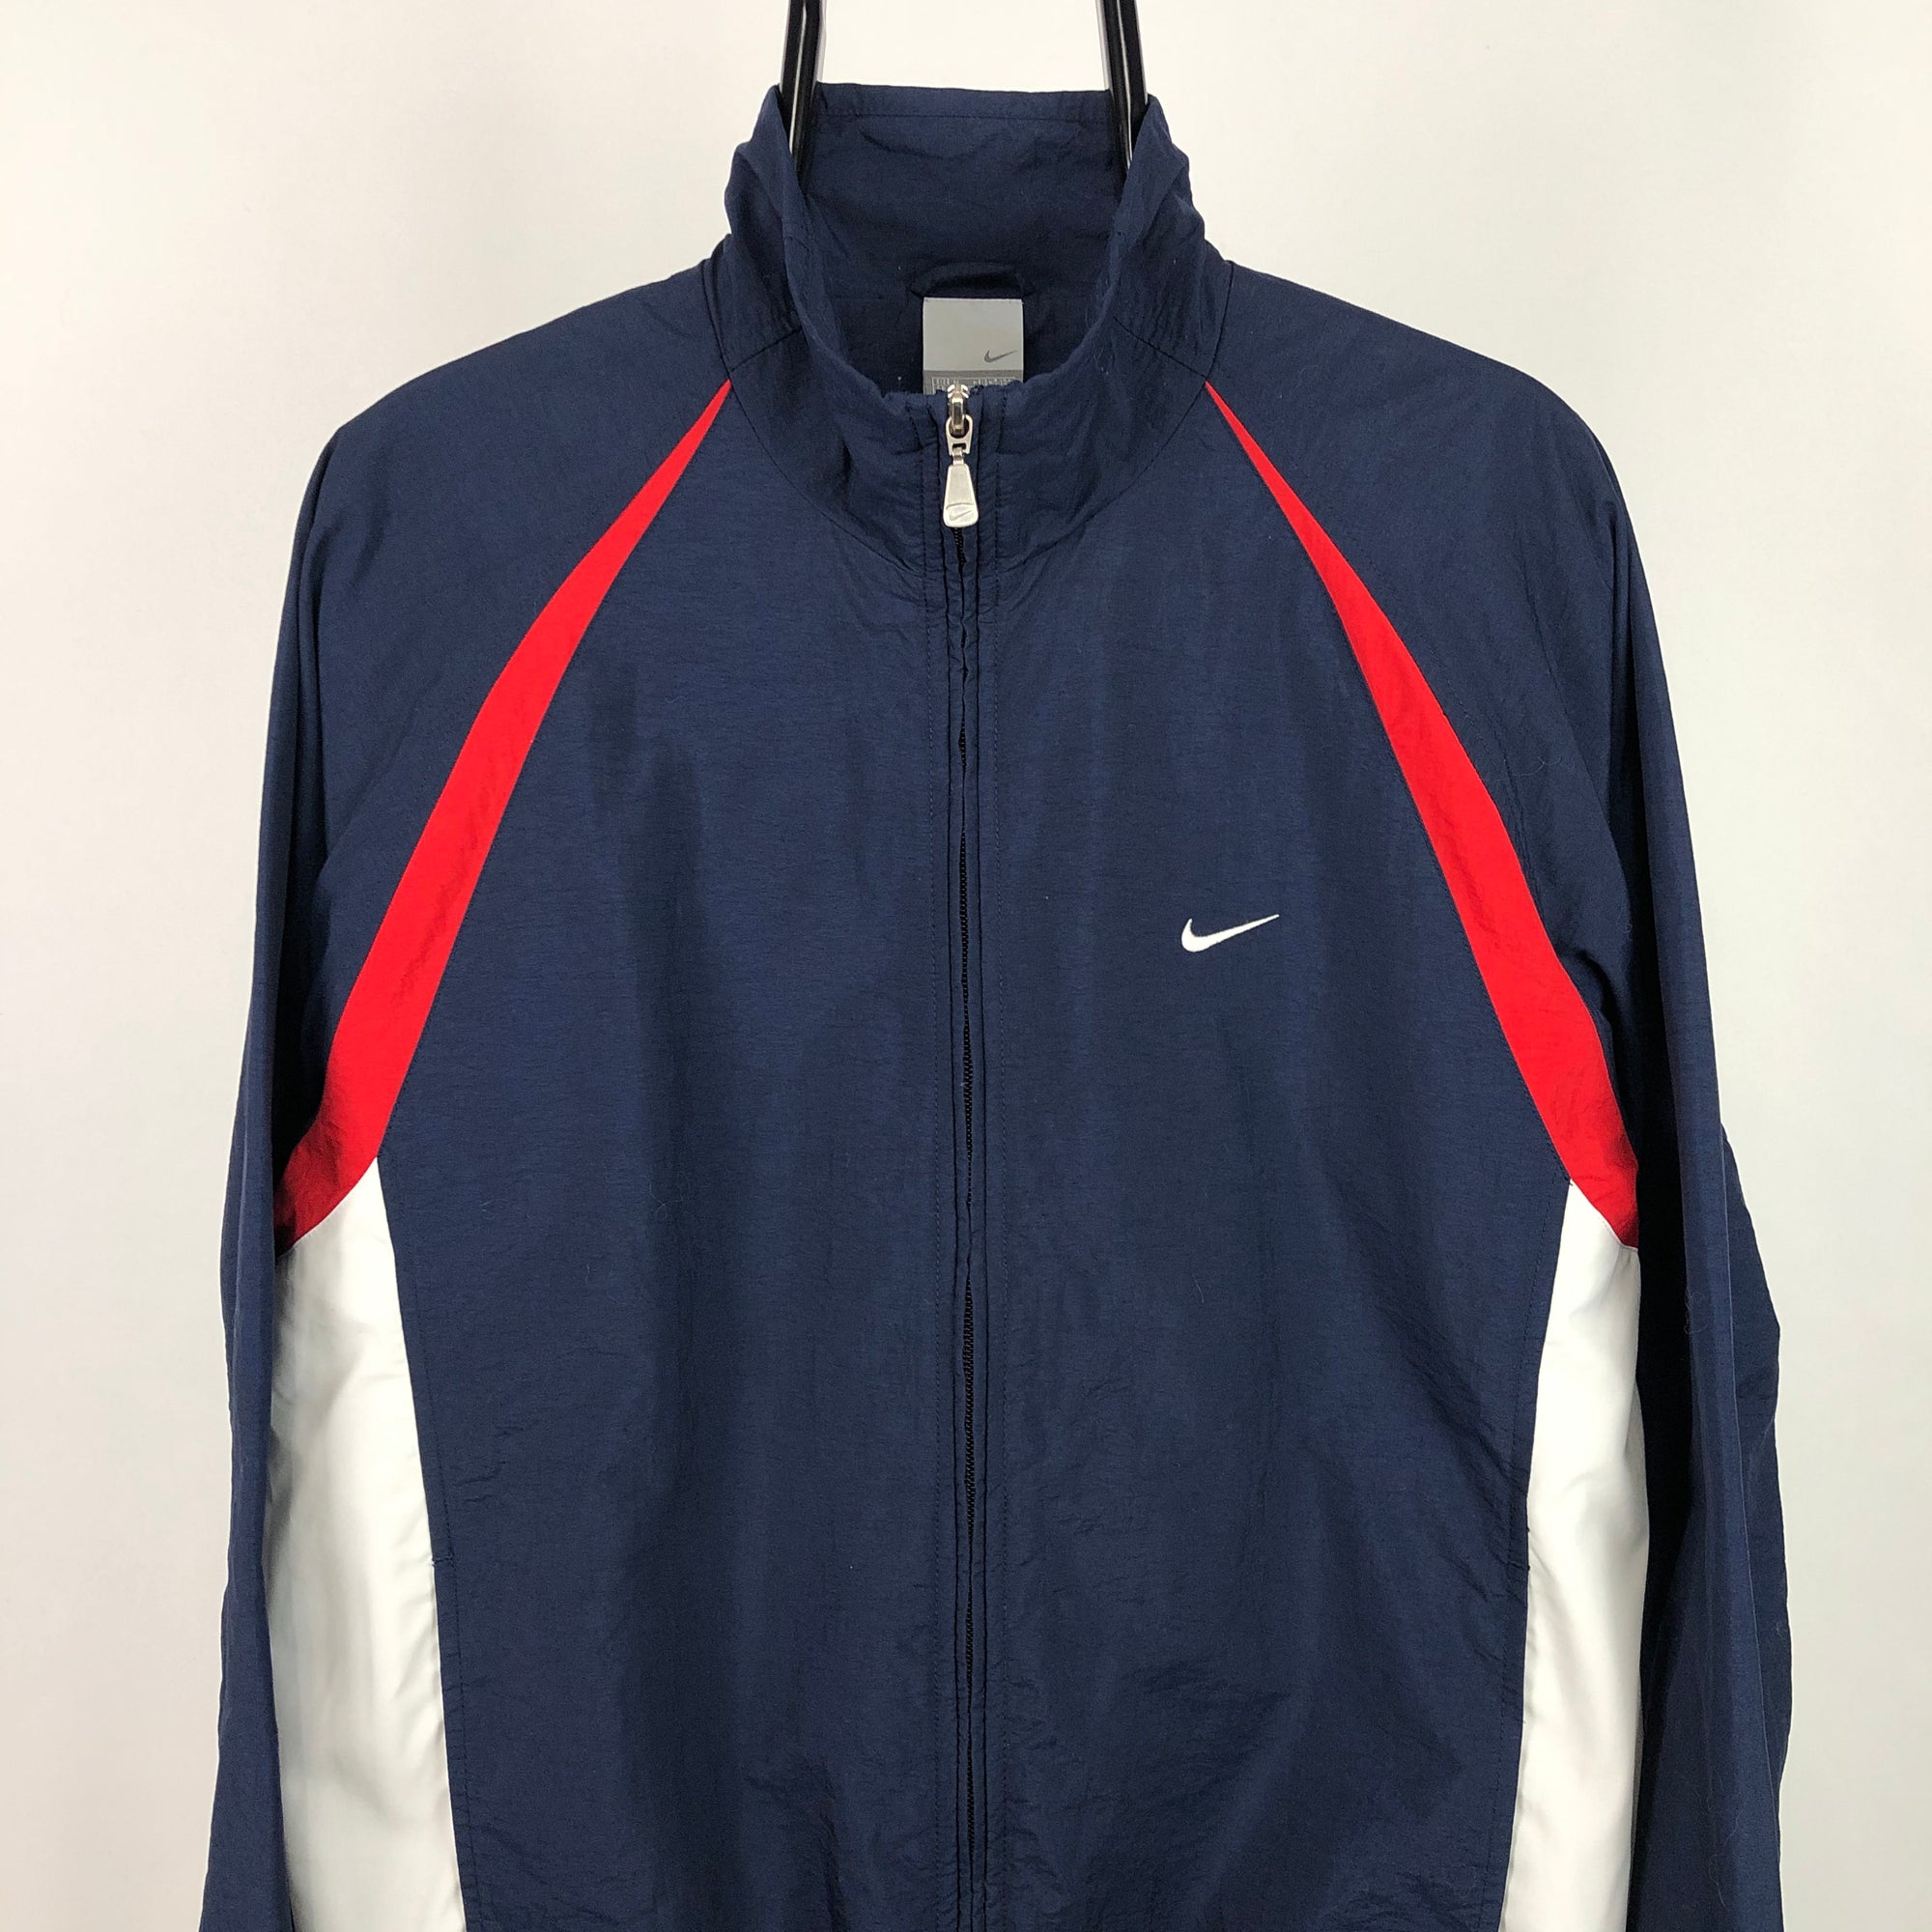 Vintage Nike Track Jacket in Navy/Red/White - Men's Medium/Women's Large